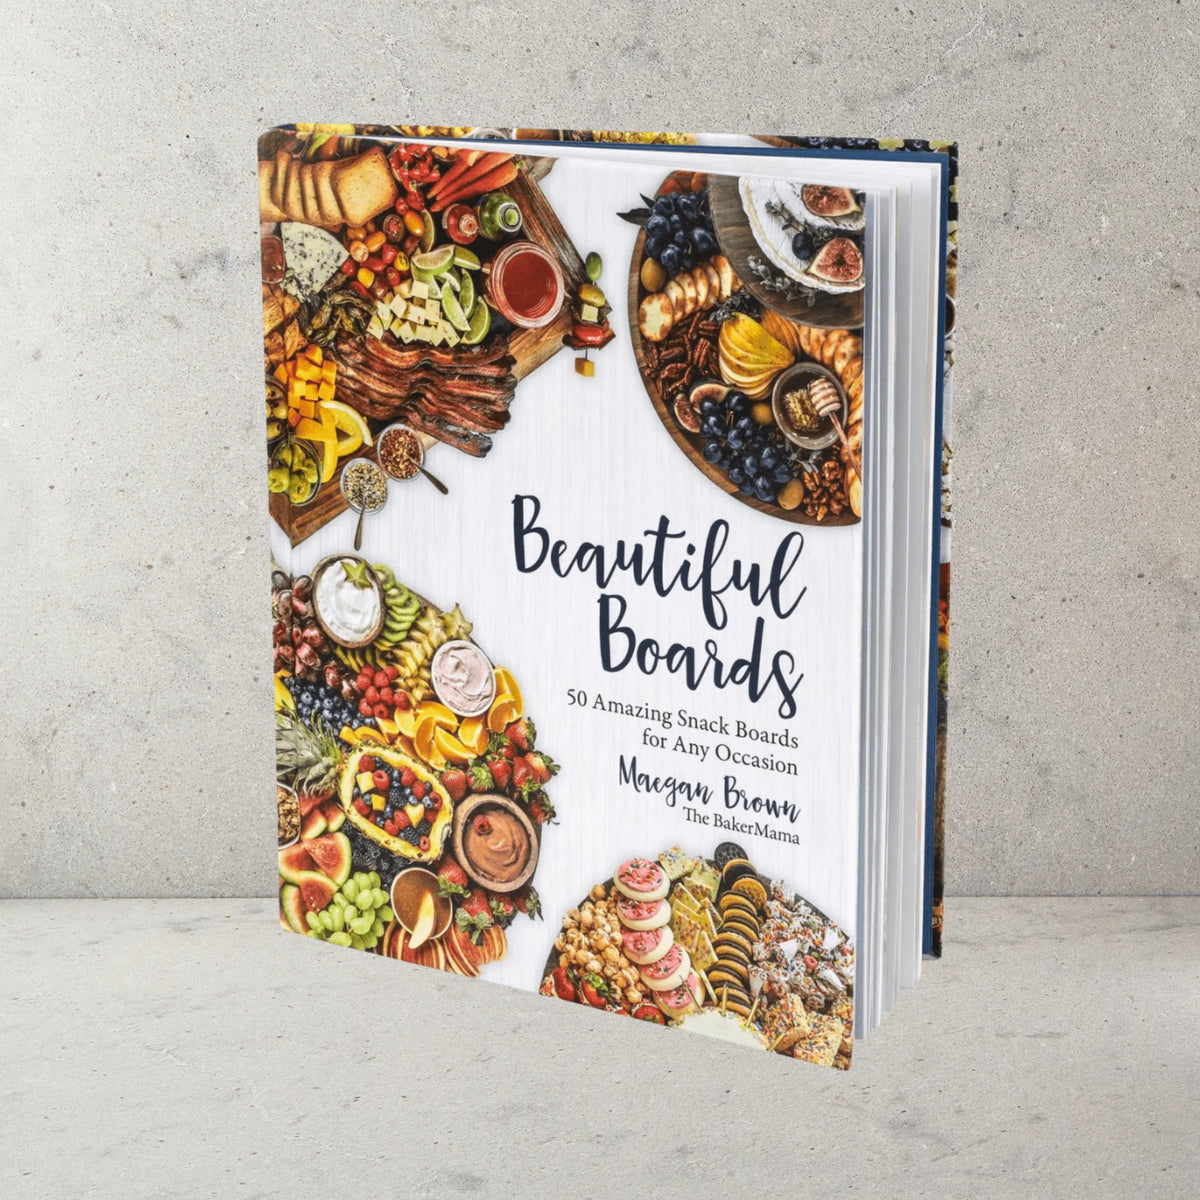 Beautiful Boards Cookbook by Maegan Brown - The BakerMama. Cookbook is hardcover.